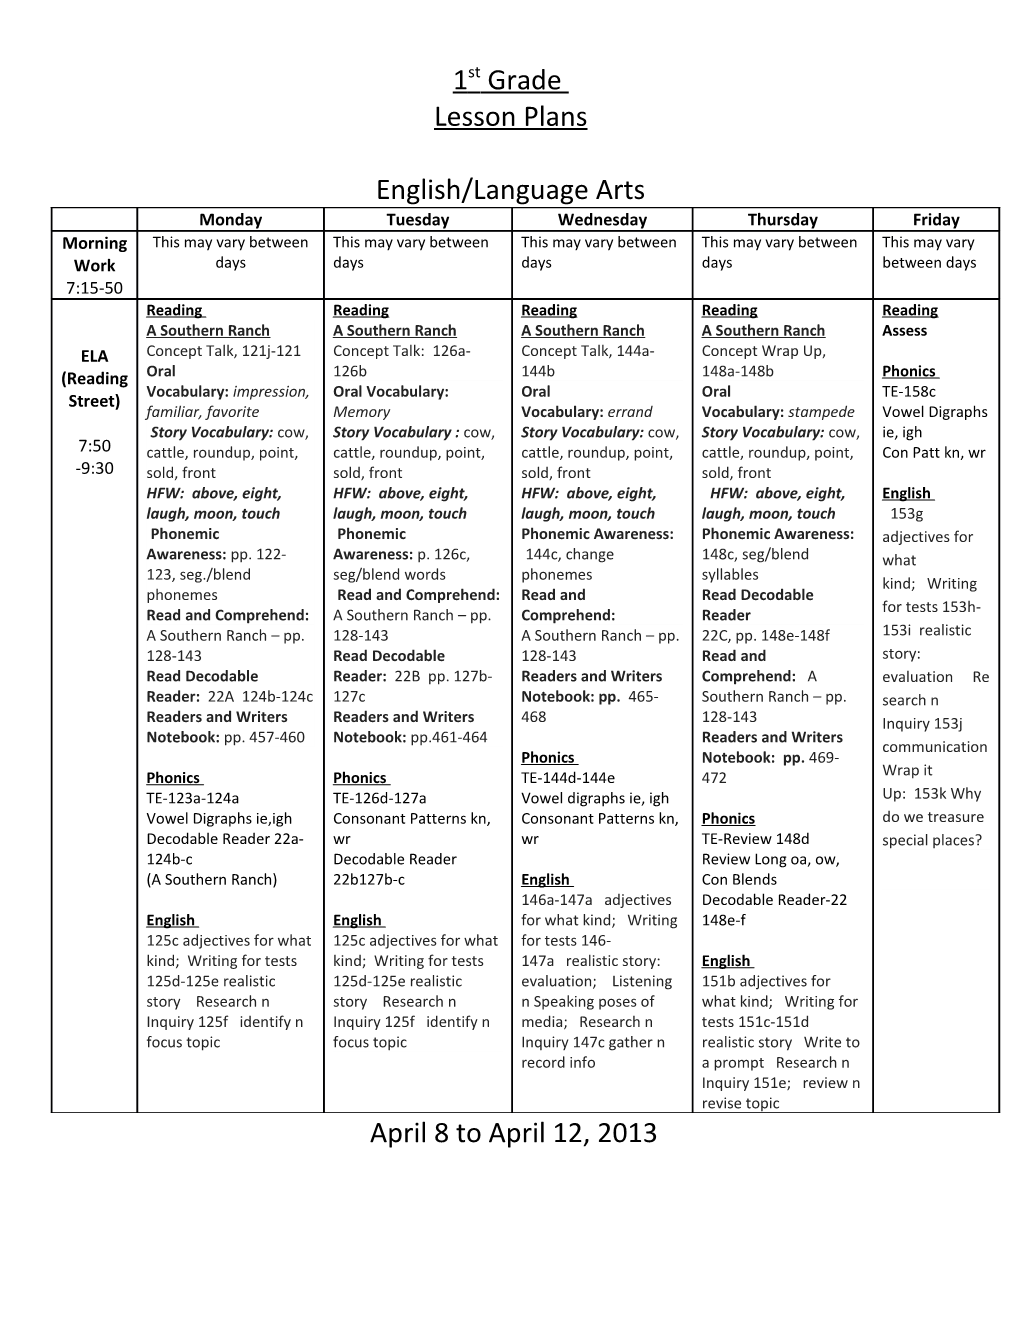 English/Language Arts s1